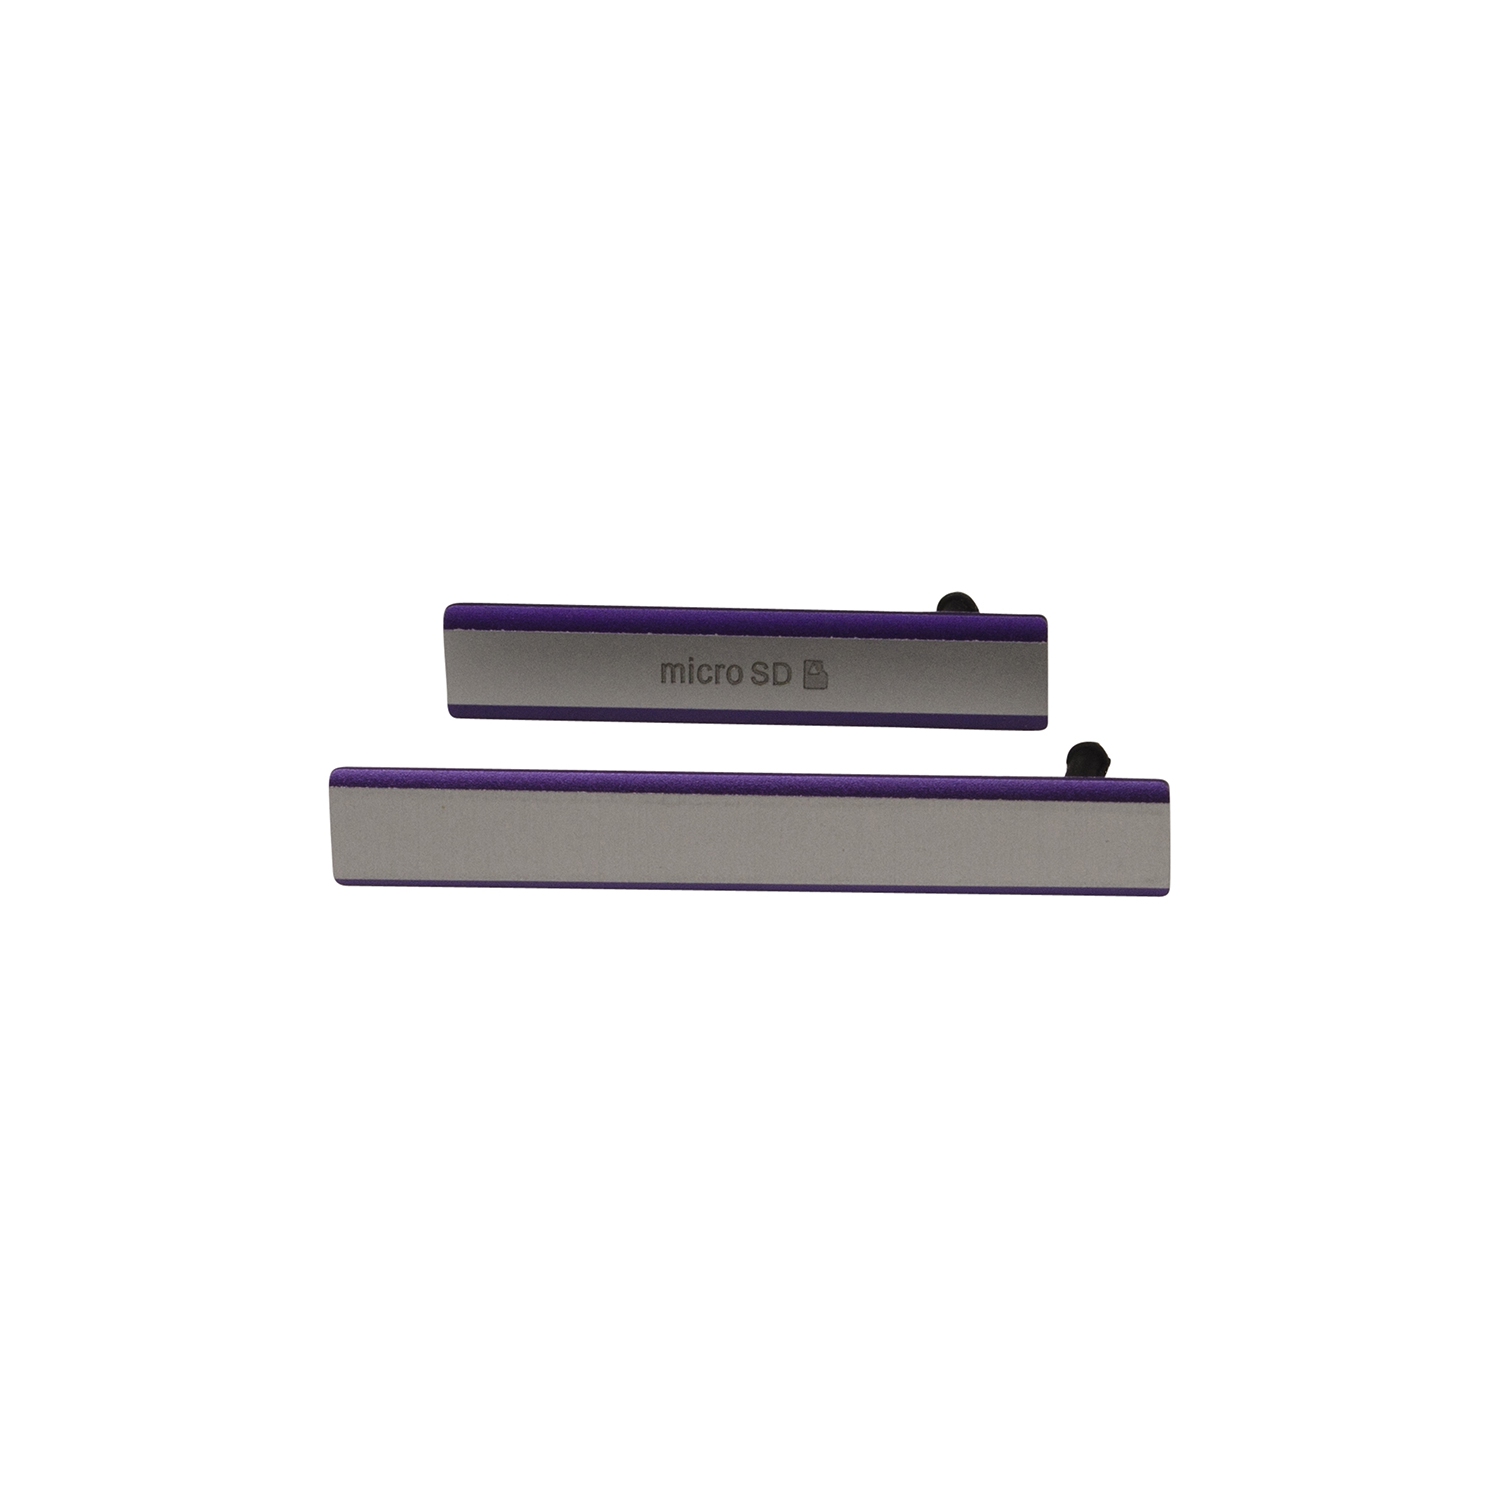 Sony Xperia Z2 SD Card Cap Set (2 pcs/set) - Purple